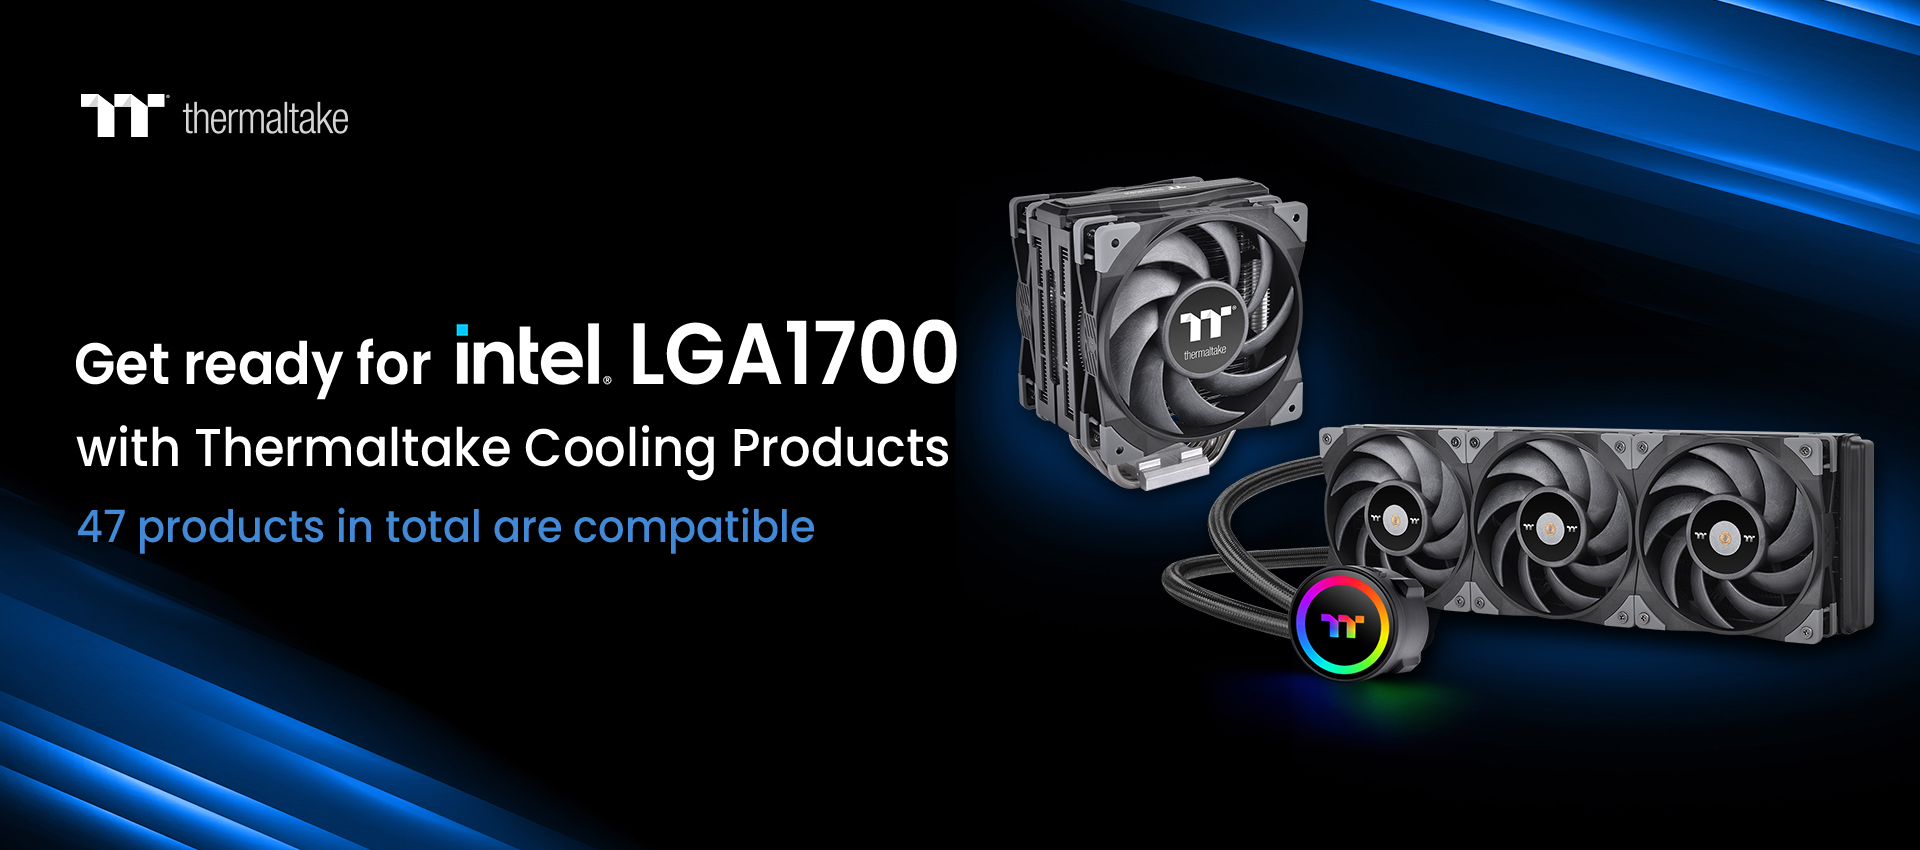 Thermaltake support Intel LGA1700 Socket